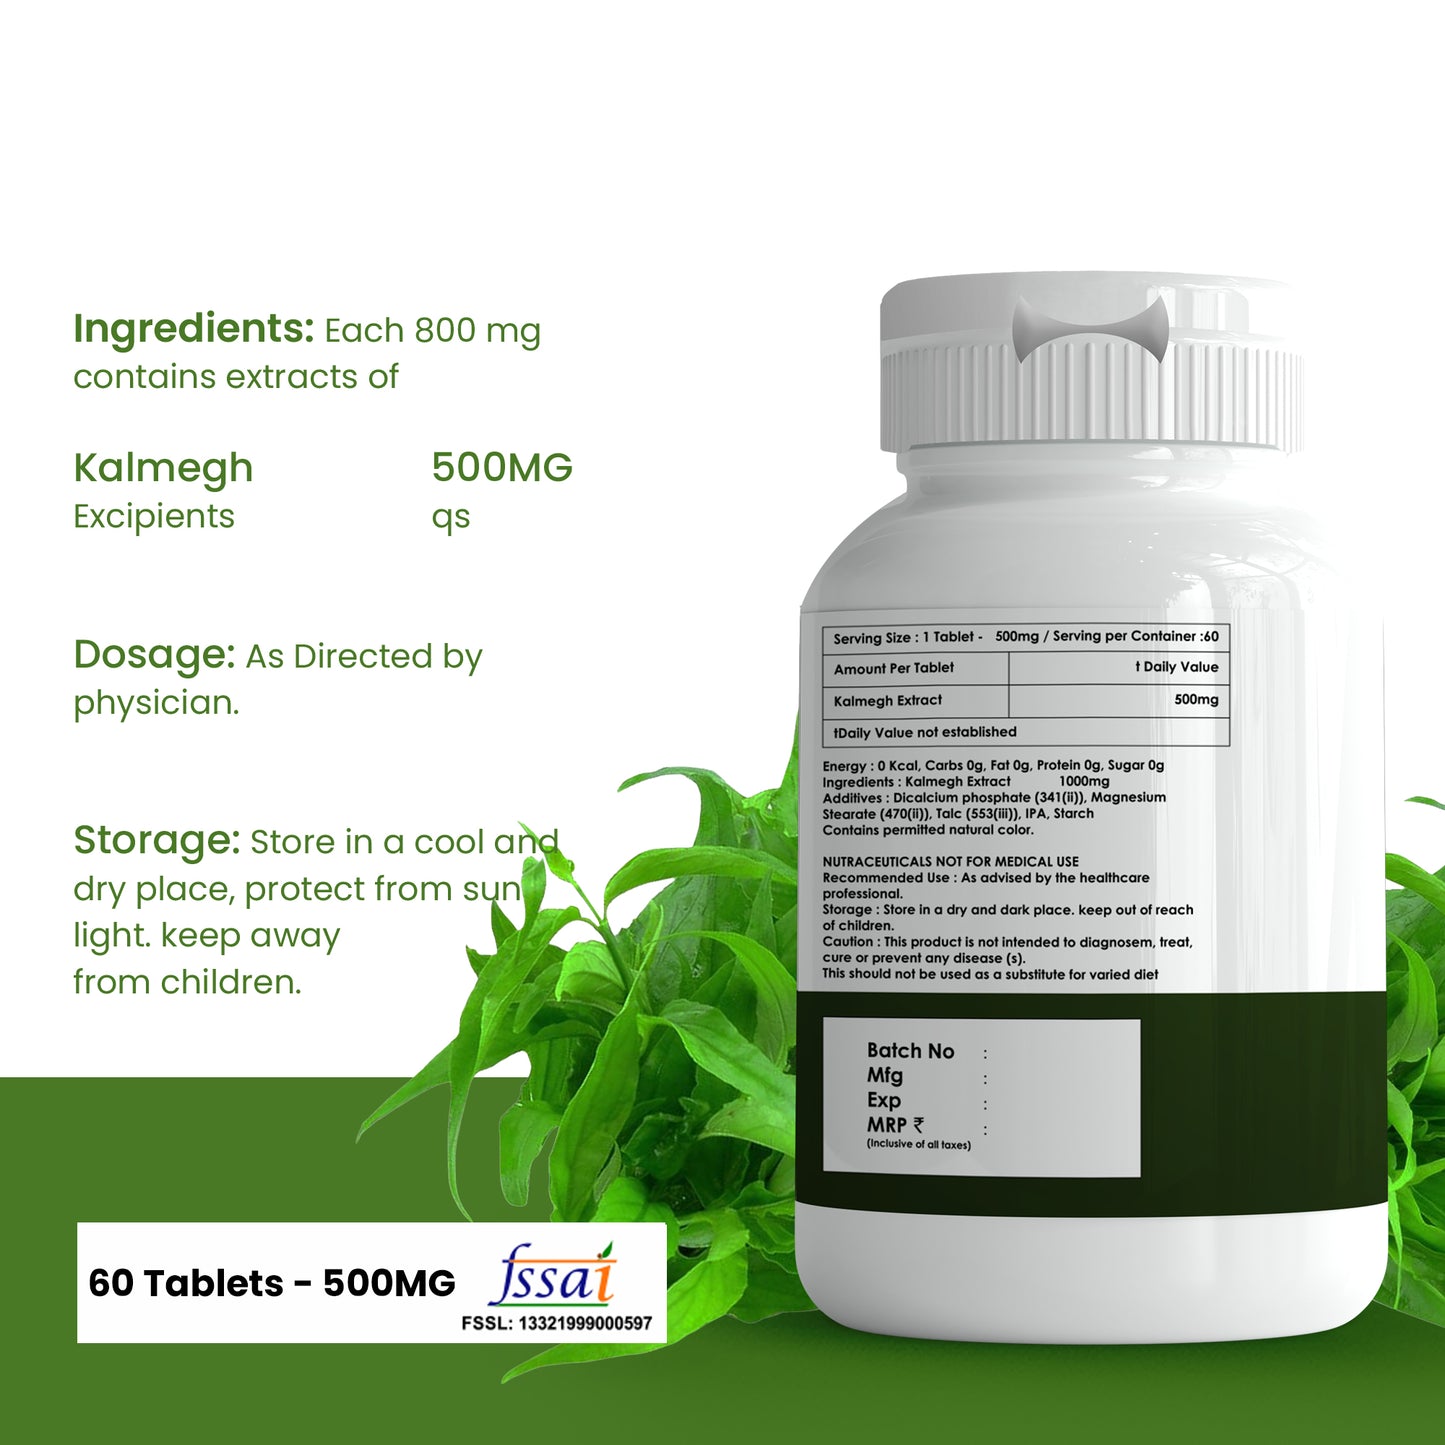 Happy Millions Kalmegh - The Detoxifier | 60 Tablets | 500 Mg